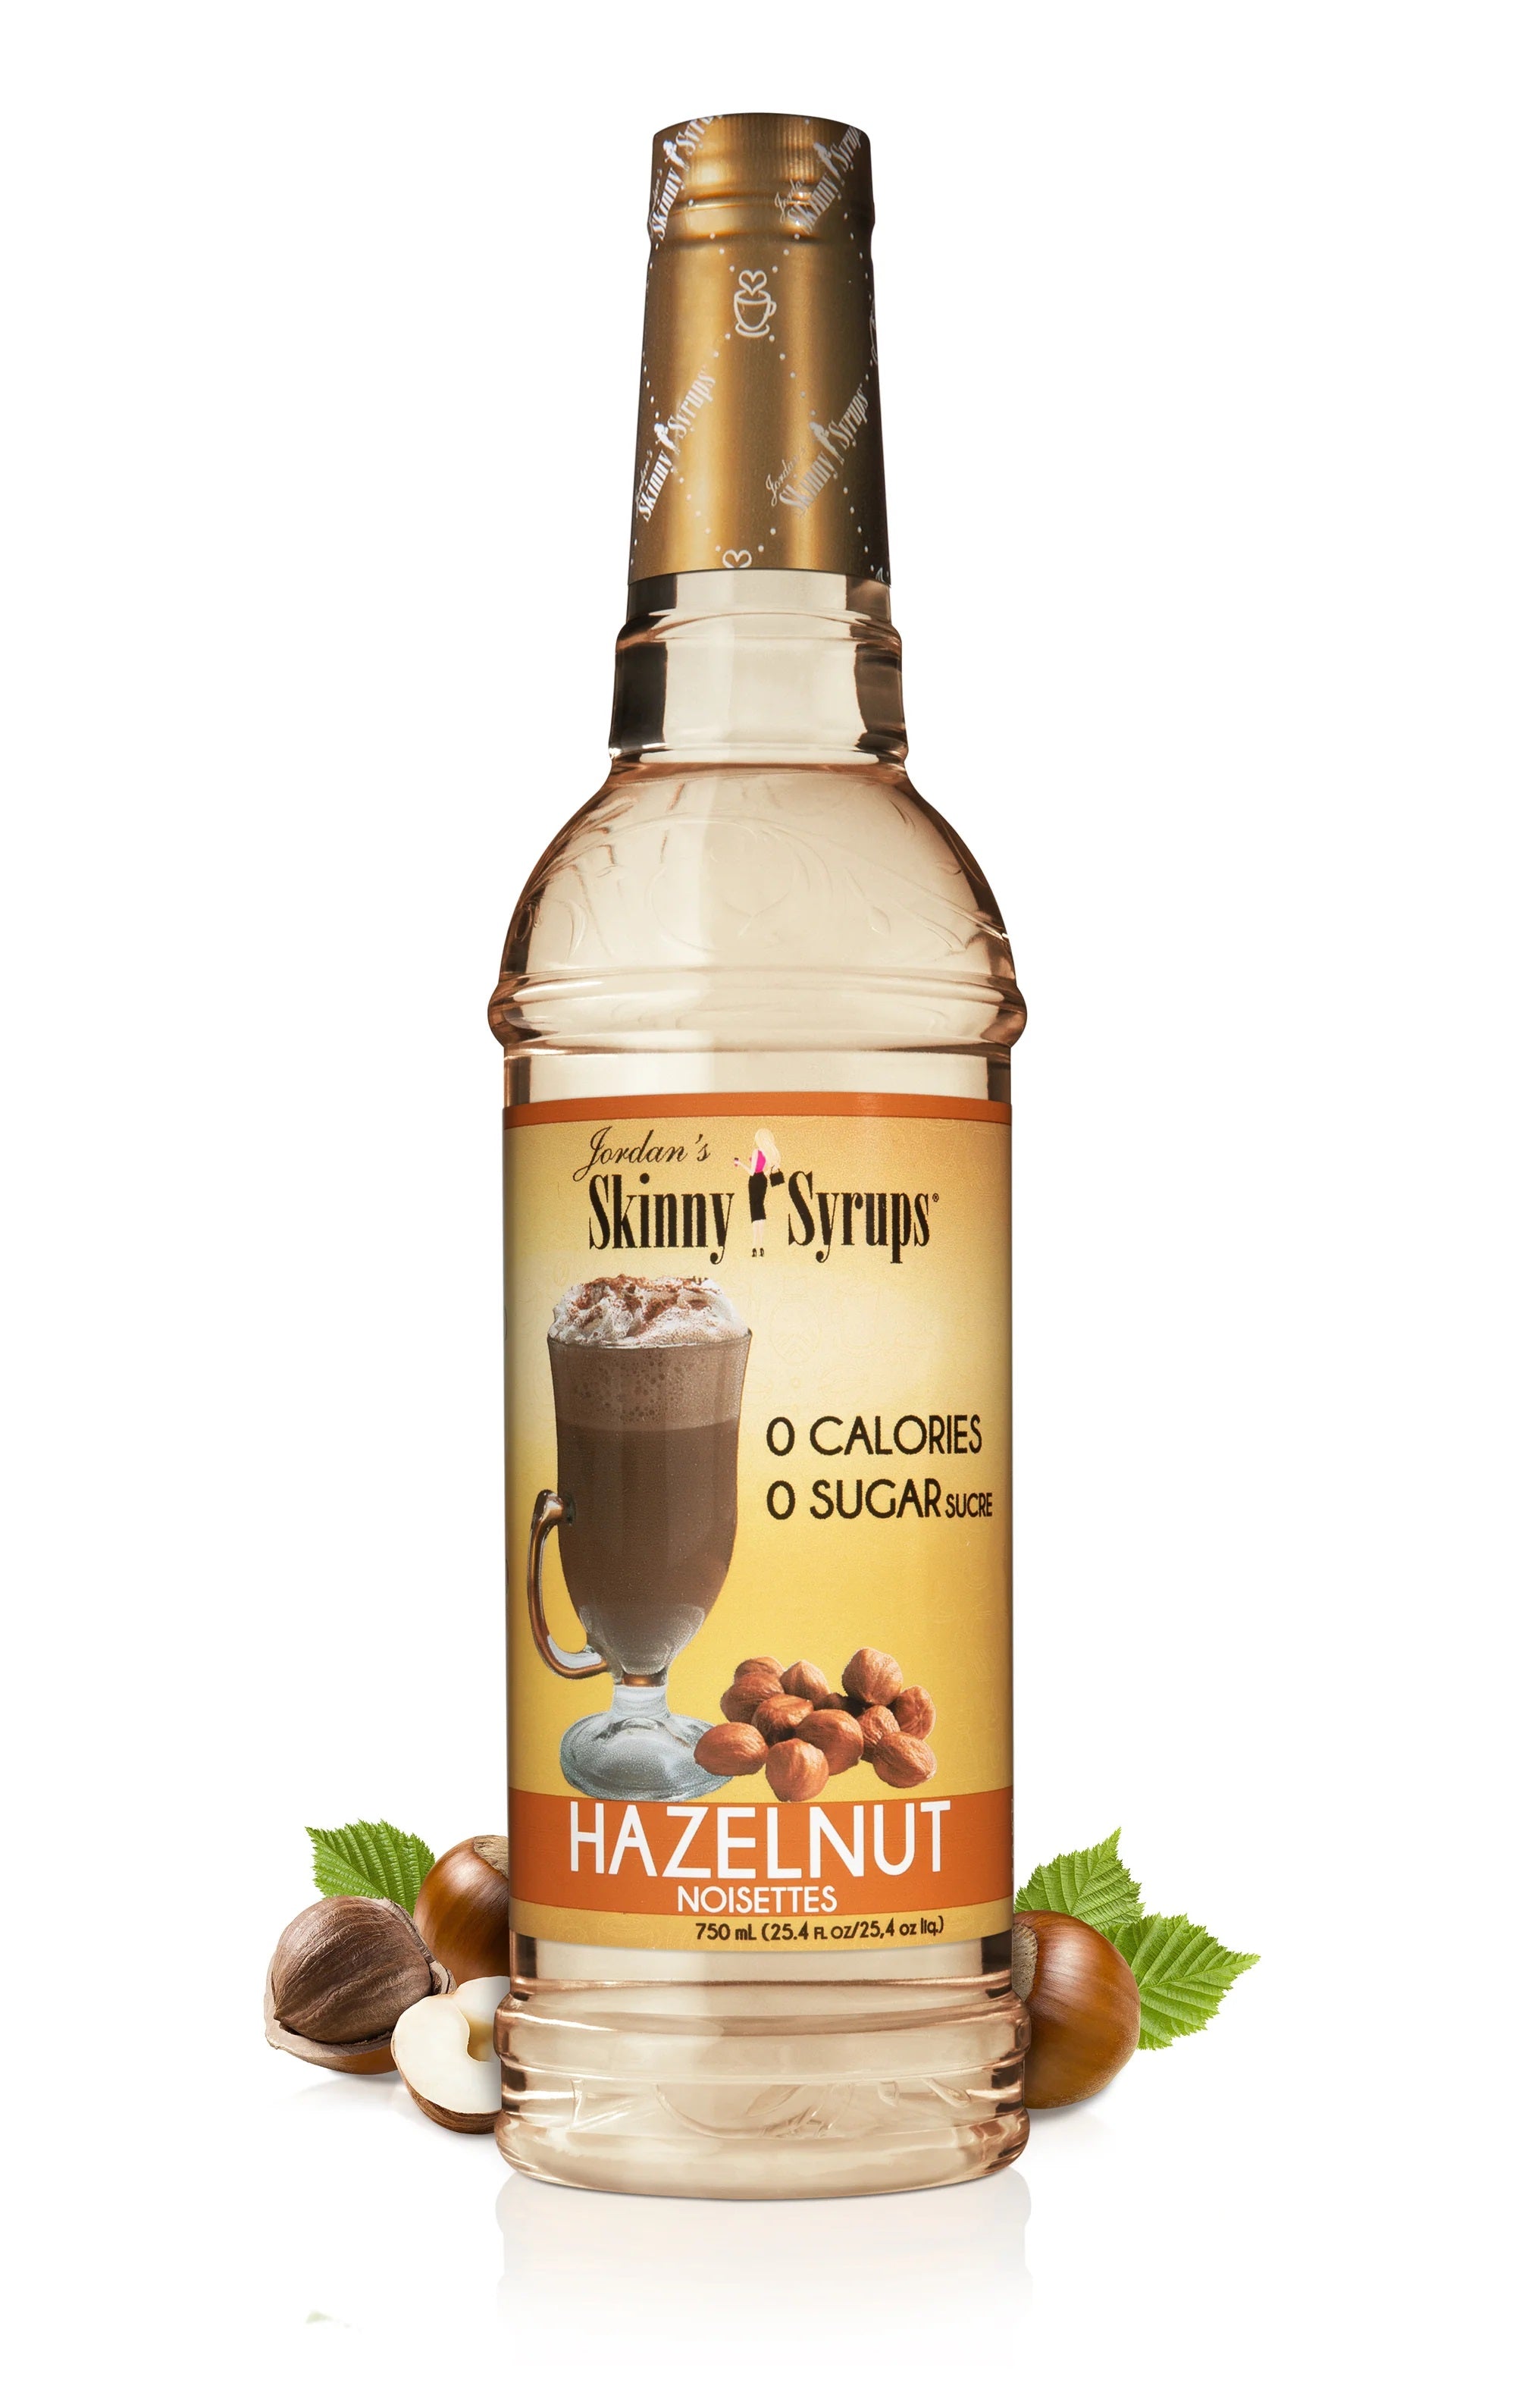 Jordan's Skinny Syrups Sugar Free Hazelnut Syrup